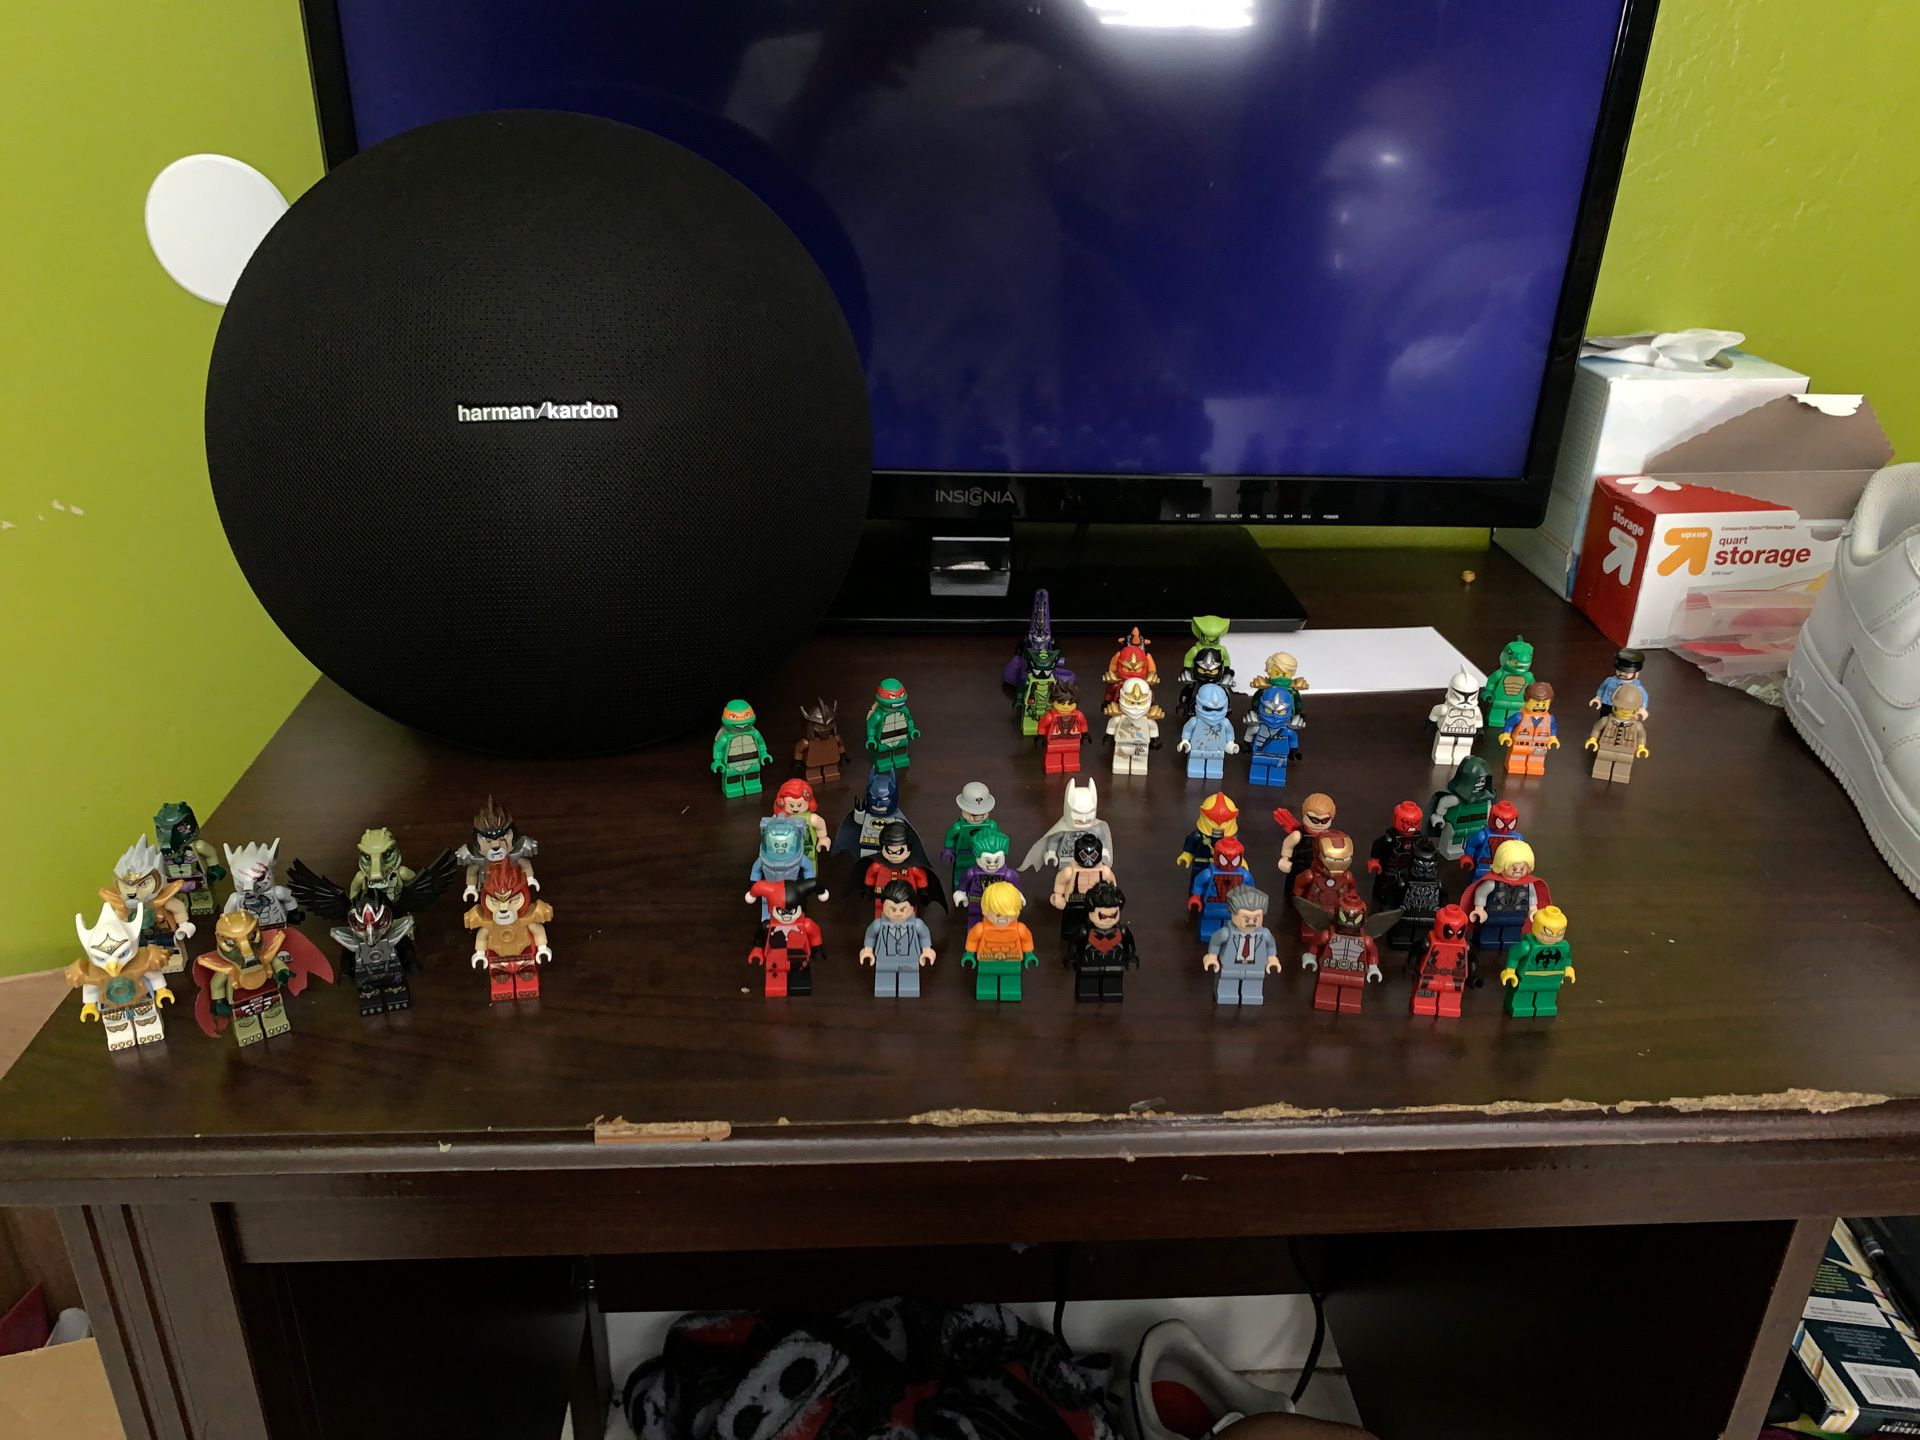 53 Lego mini figures